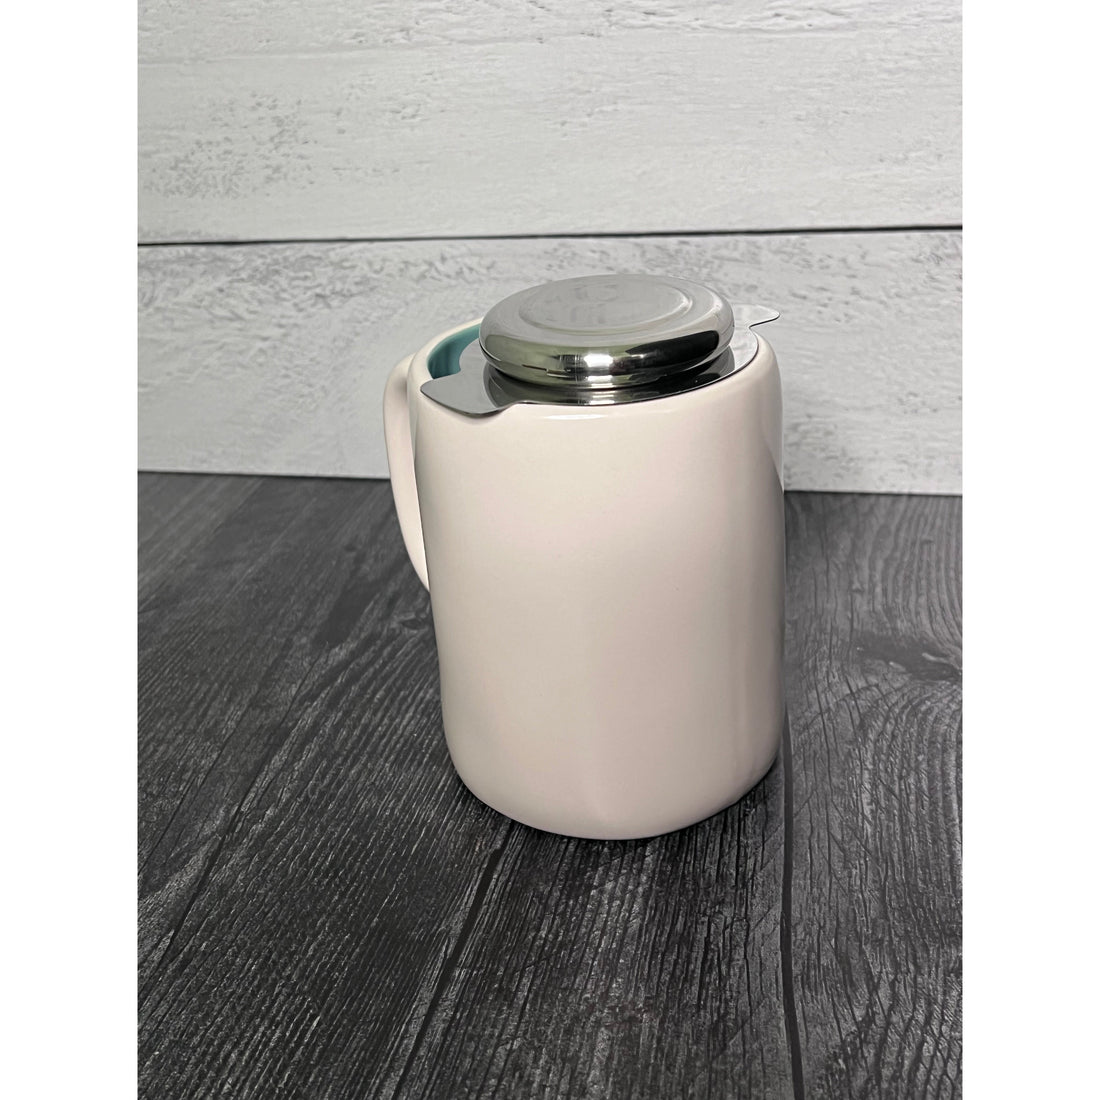 Cylinder Stainless Steel Tea Strainer-Handmade Naturals Inc